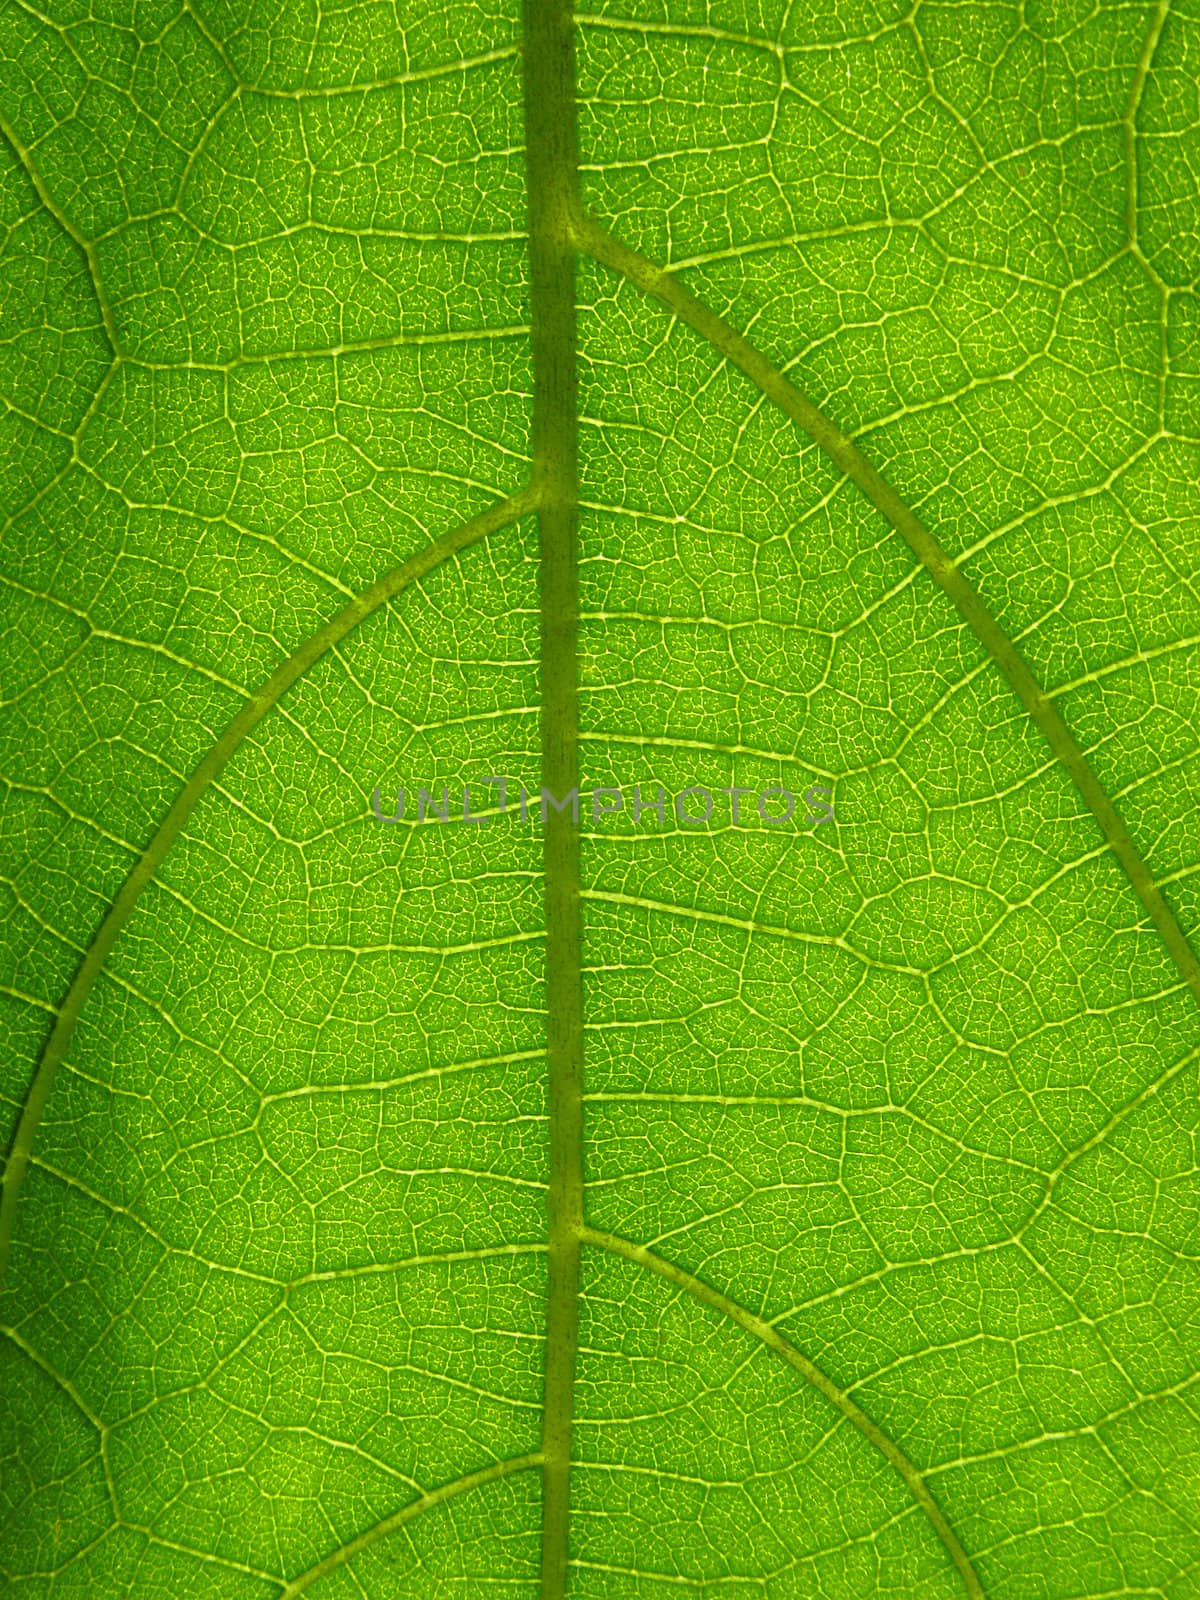 Microscopic plant leaf by enderbirer